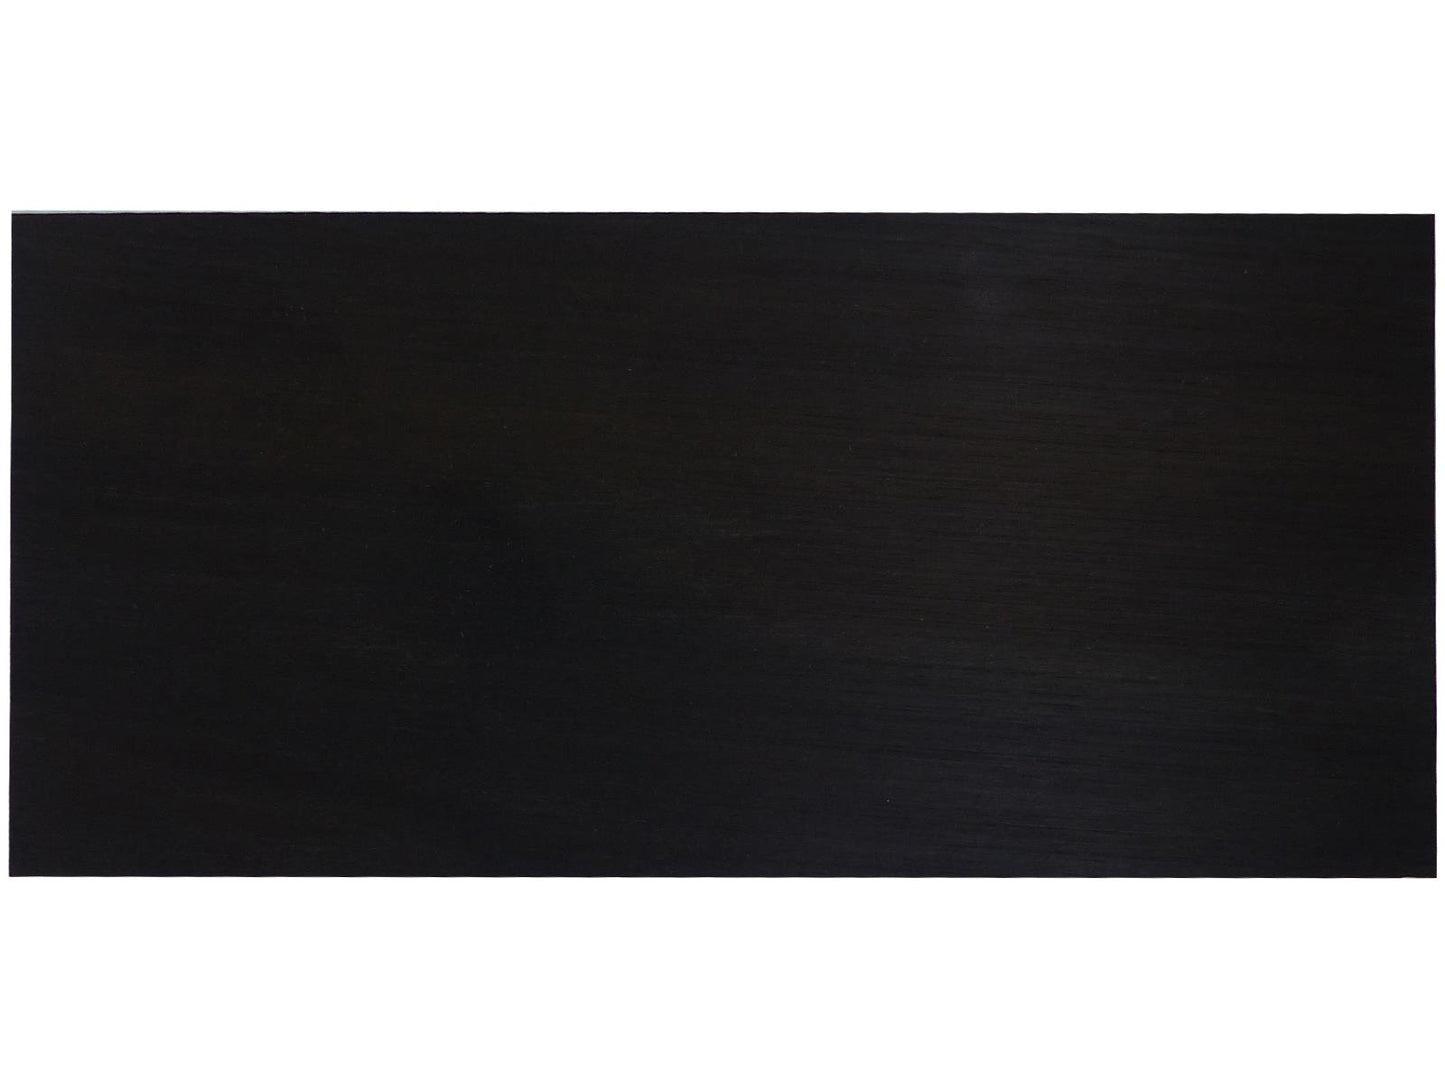 Luthitec Ebony Headstock Veneer - 190x90x2mm (7.5x3.54x0.08"), Black